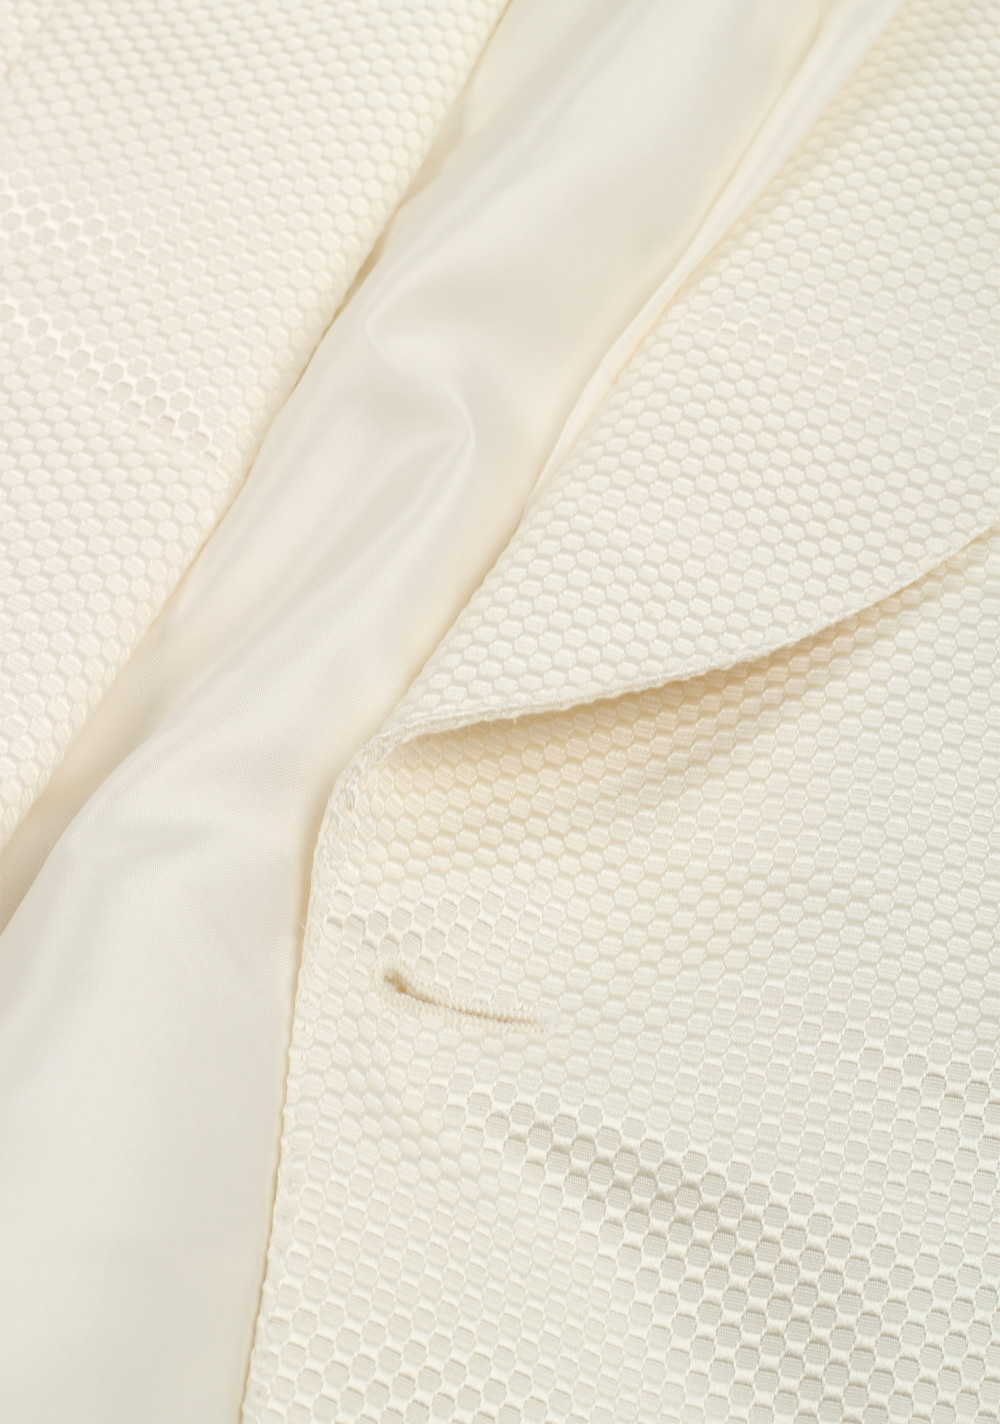 TOM FORD Shelton White Shawl Collar Sport Coat Tuxedo Dinner Jacket Size 48 / 38R U.S. | Costume Limité